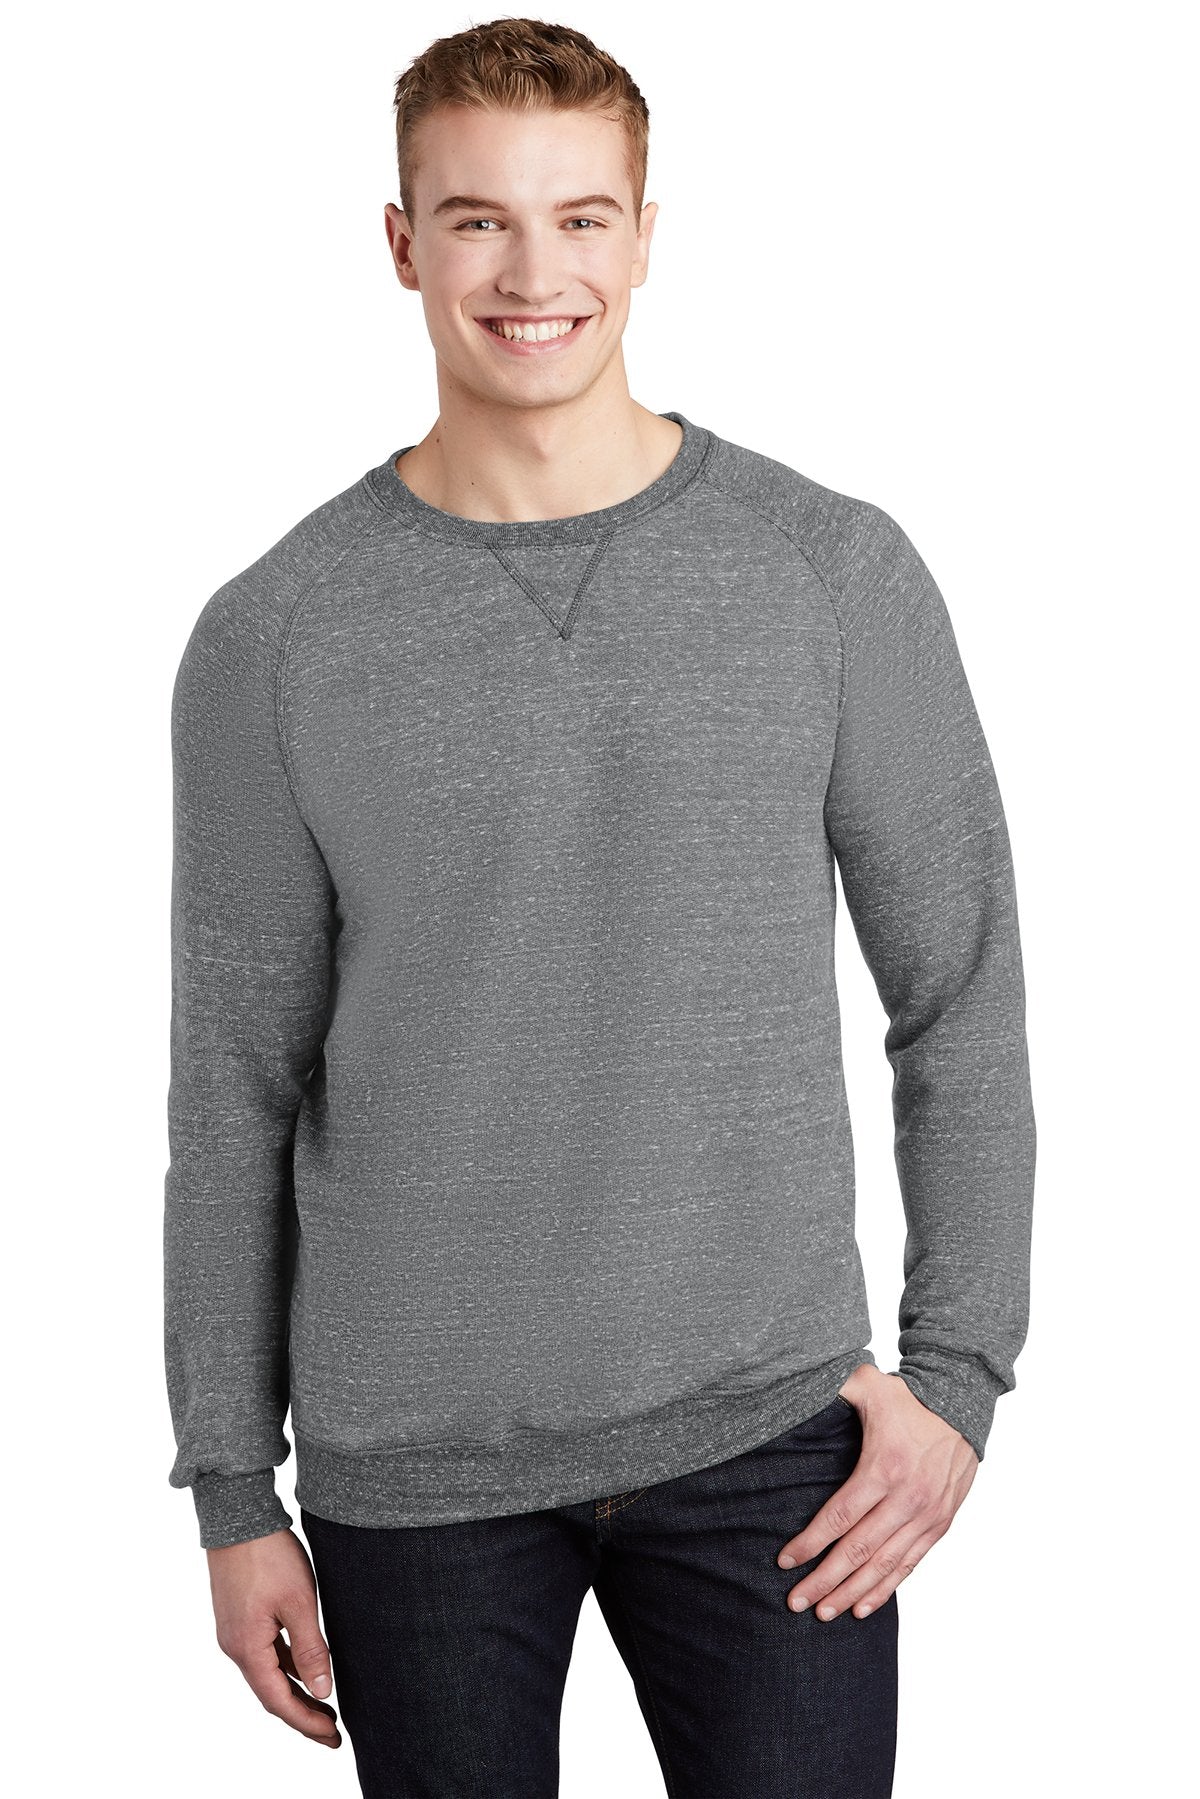 Jerzees Charcoal 91M sweatshirts with logos